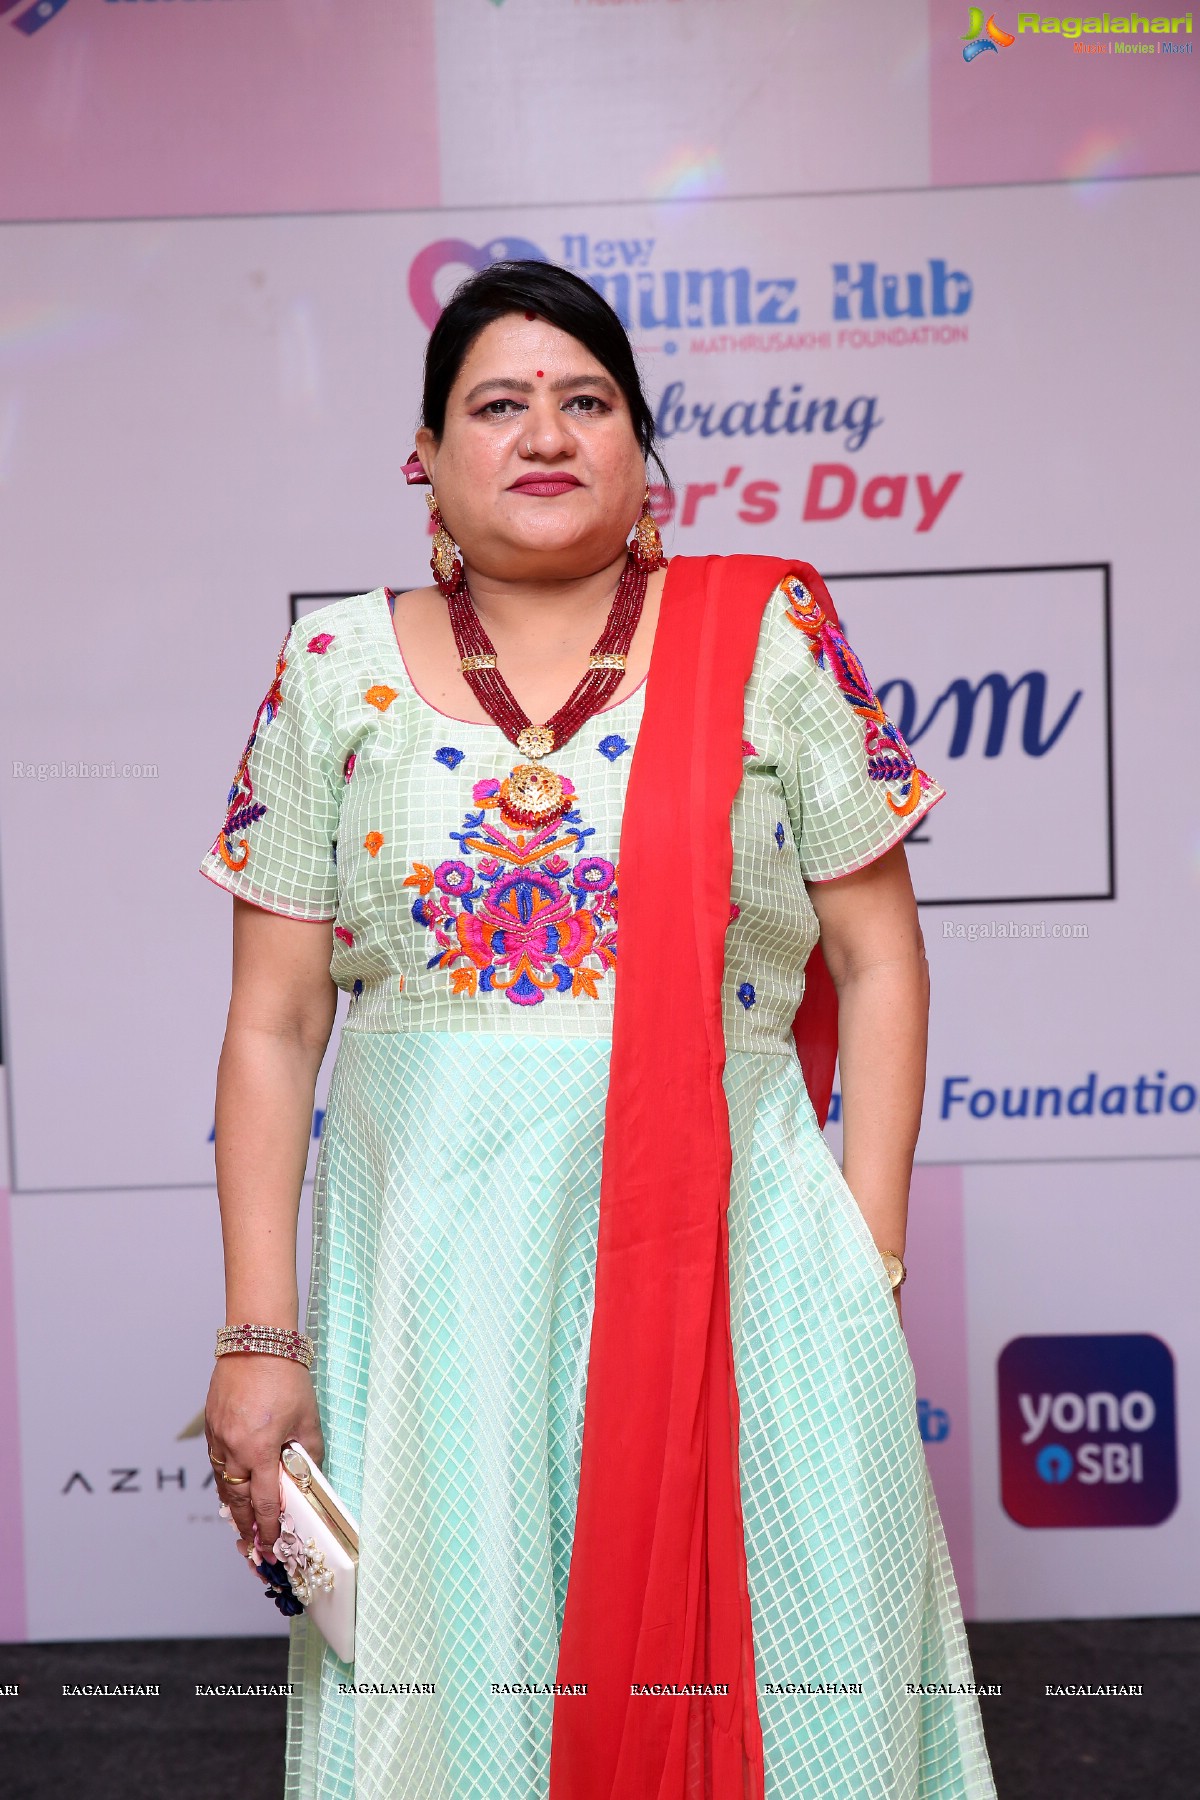 Mumz Hub and Mathrusakhi Foundation Celebrates Mother’s Day ‘Dear Mom’ at Taj Krishna Hotel